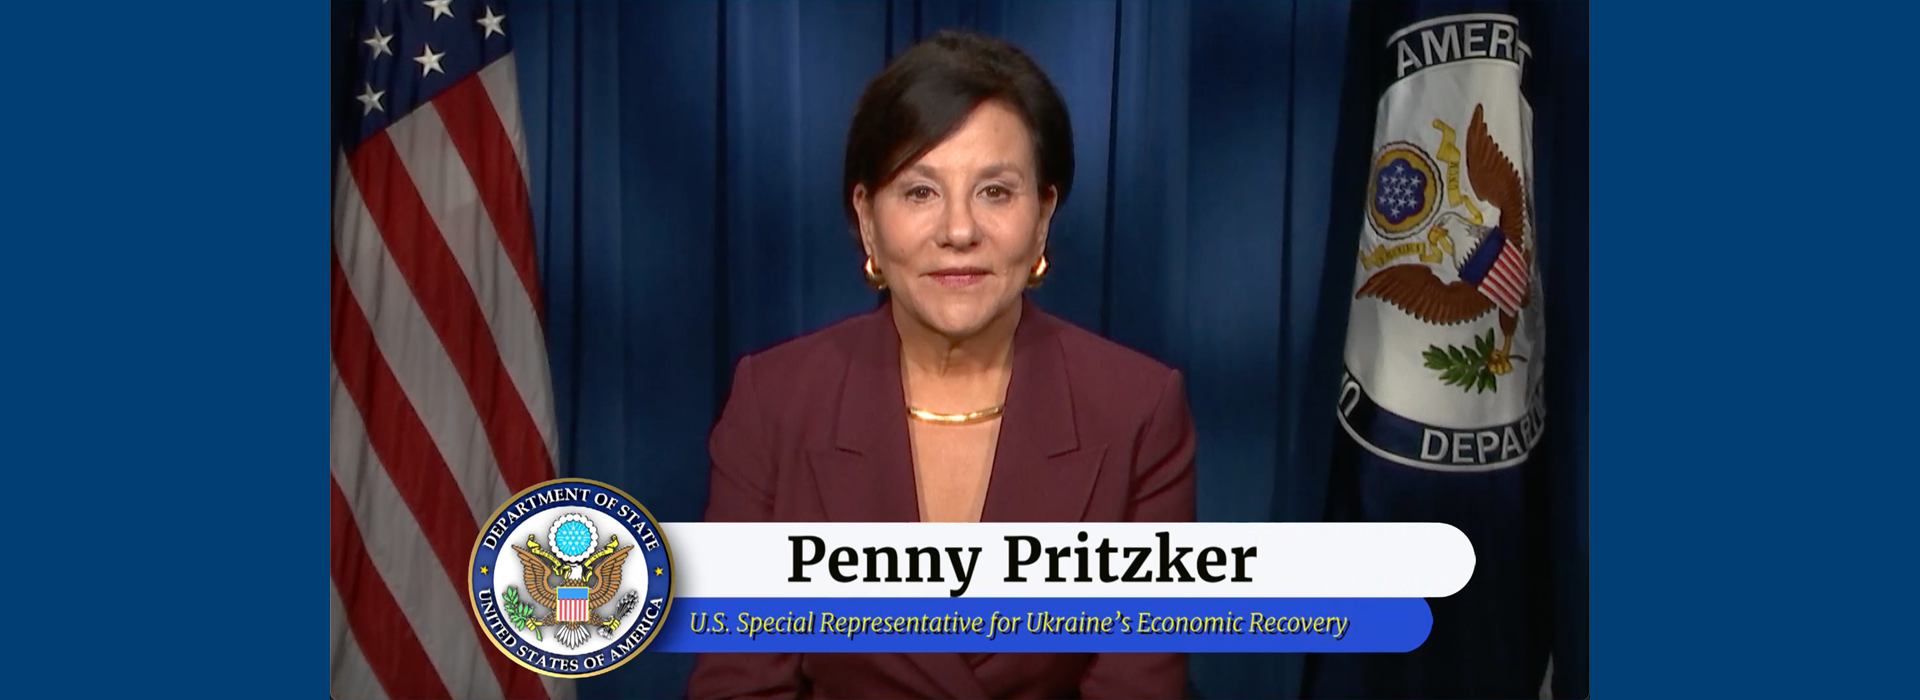 Address by Penny Pritzker, US Special Representative for Ukraine’s Economic Recovery, to AmCham Ukraine members